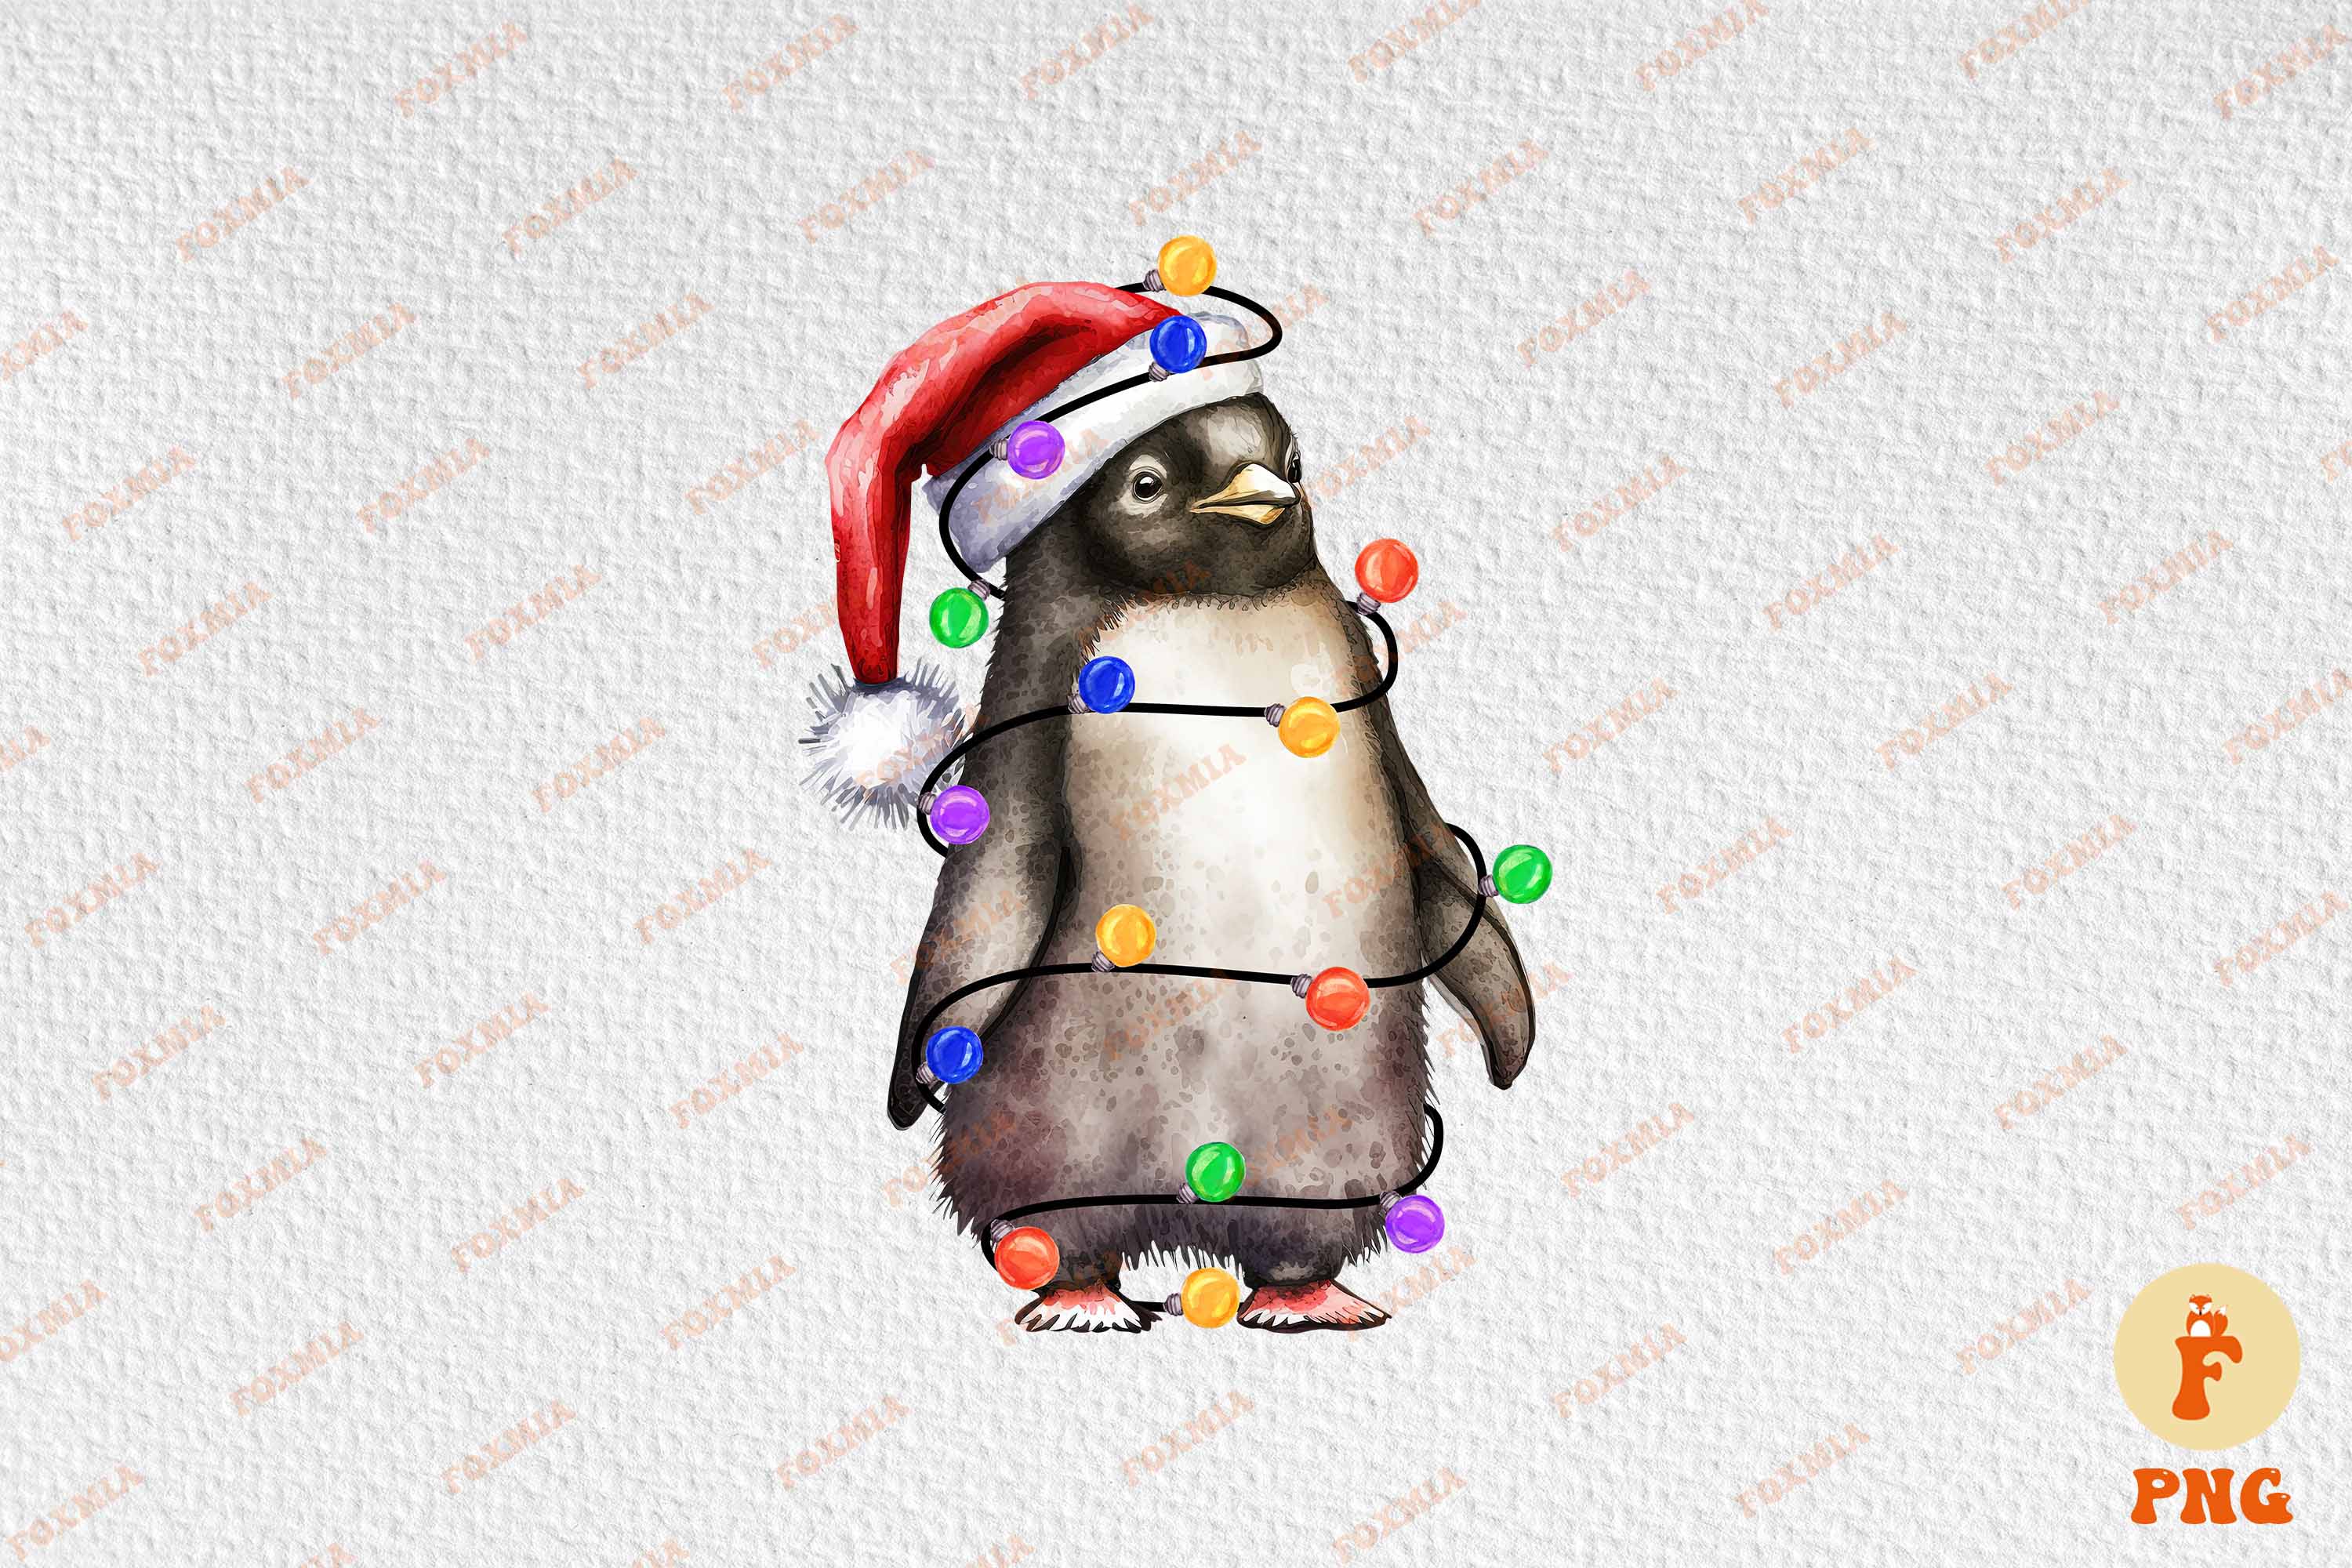 Wonderful image of a penguin wearing a santa hat.